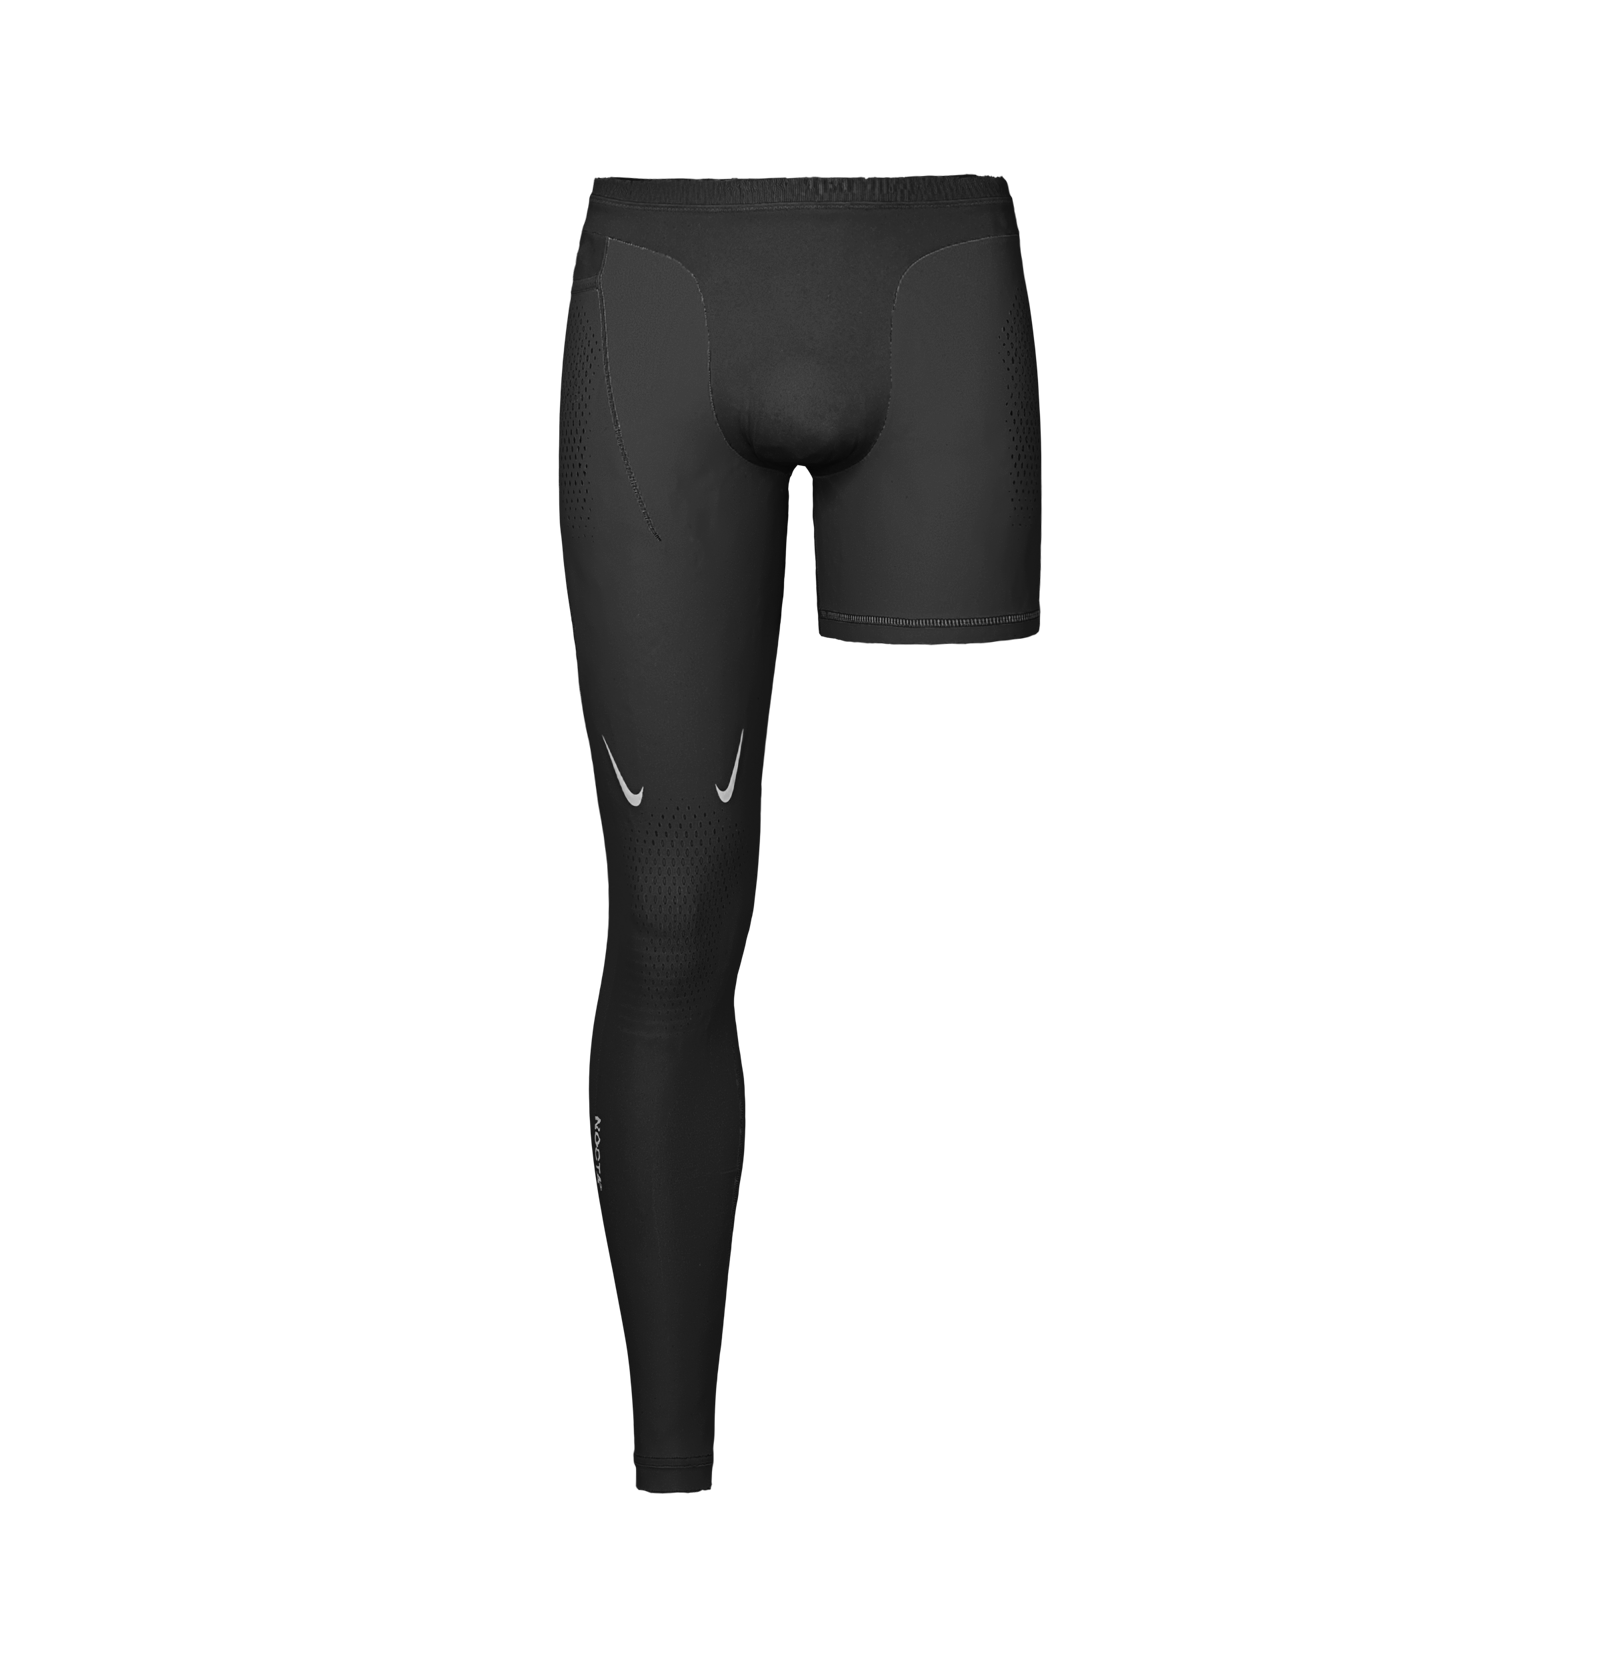 Jonscart Men's 3/4 One Leg Compression Capri Tights Pants Athletic Base  Layer Underwear Black-r Small